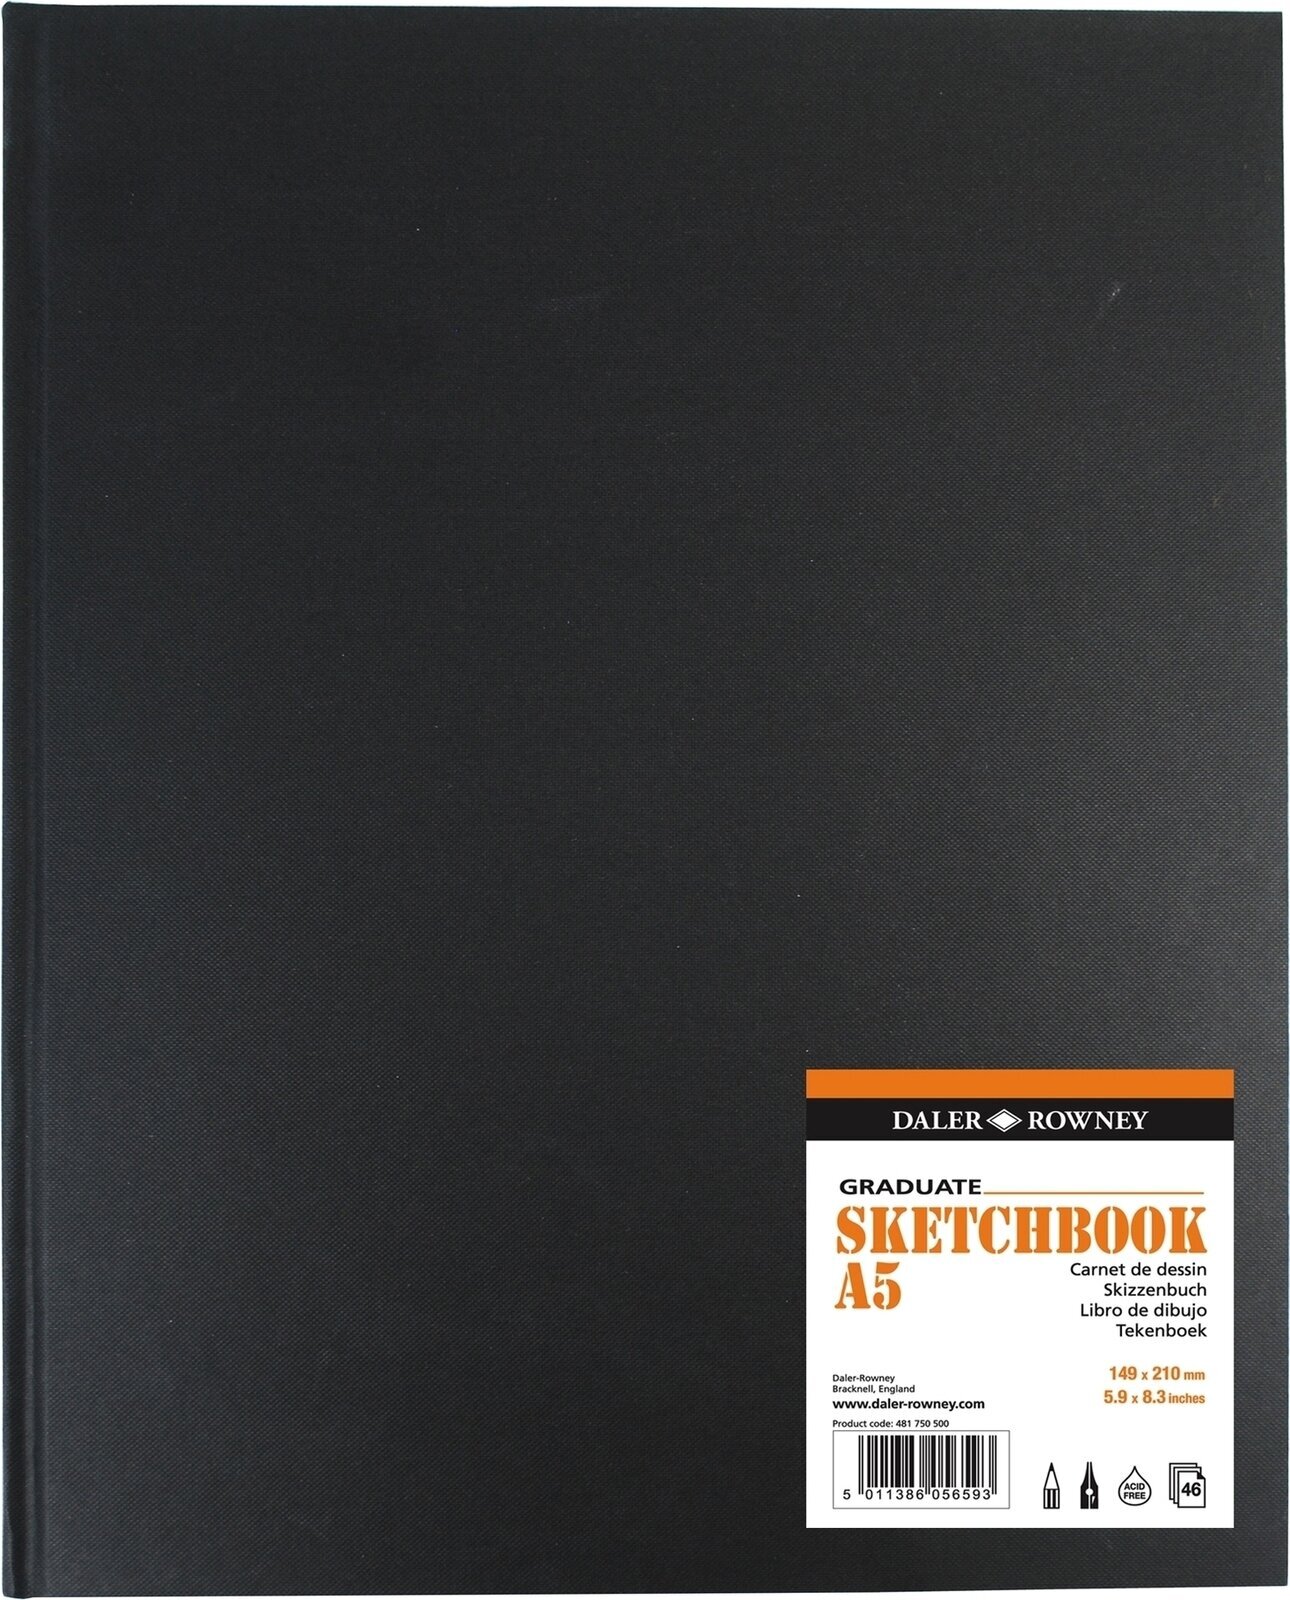 Sketchbook Daler Rowney Graduate Sketchbook Graduate A5 130 g Sketchbook